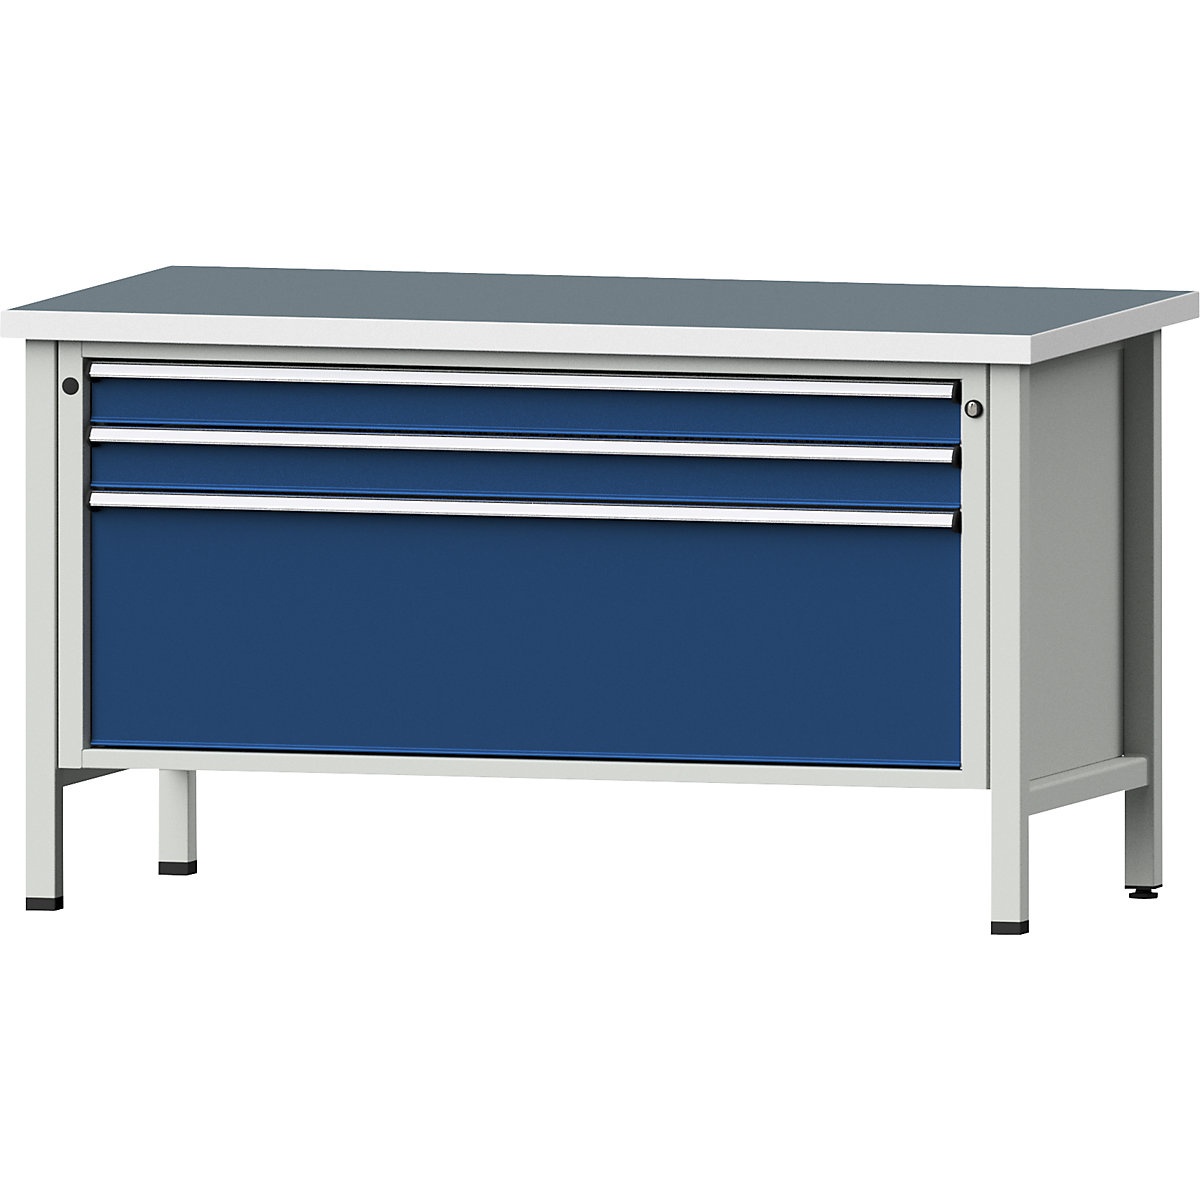 Établi avec tiroirs XL/XXL, sur piétement – ANKE, largeur 1500 mm, 3 tiroirs, plateau universel, façade bleu gentiane-9